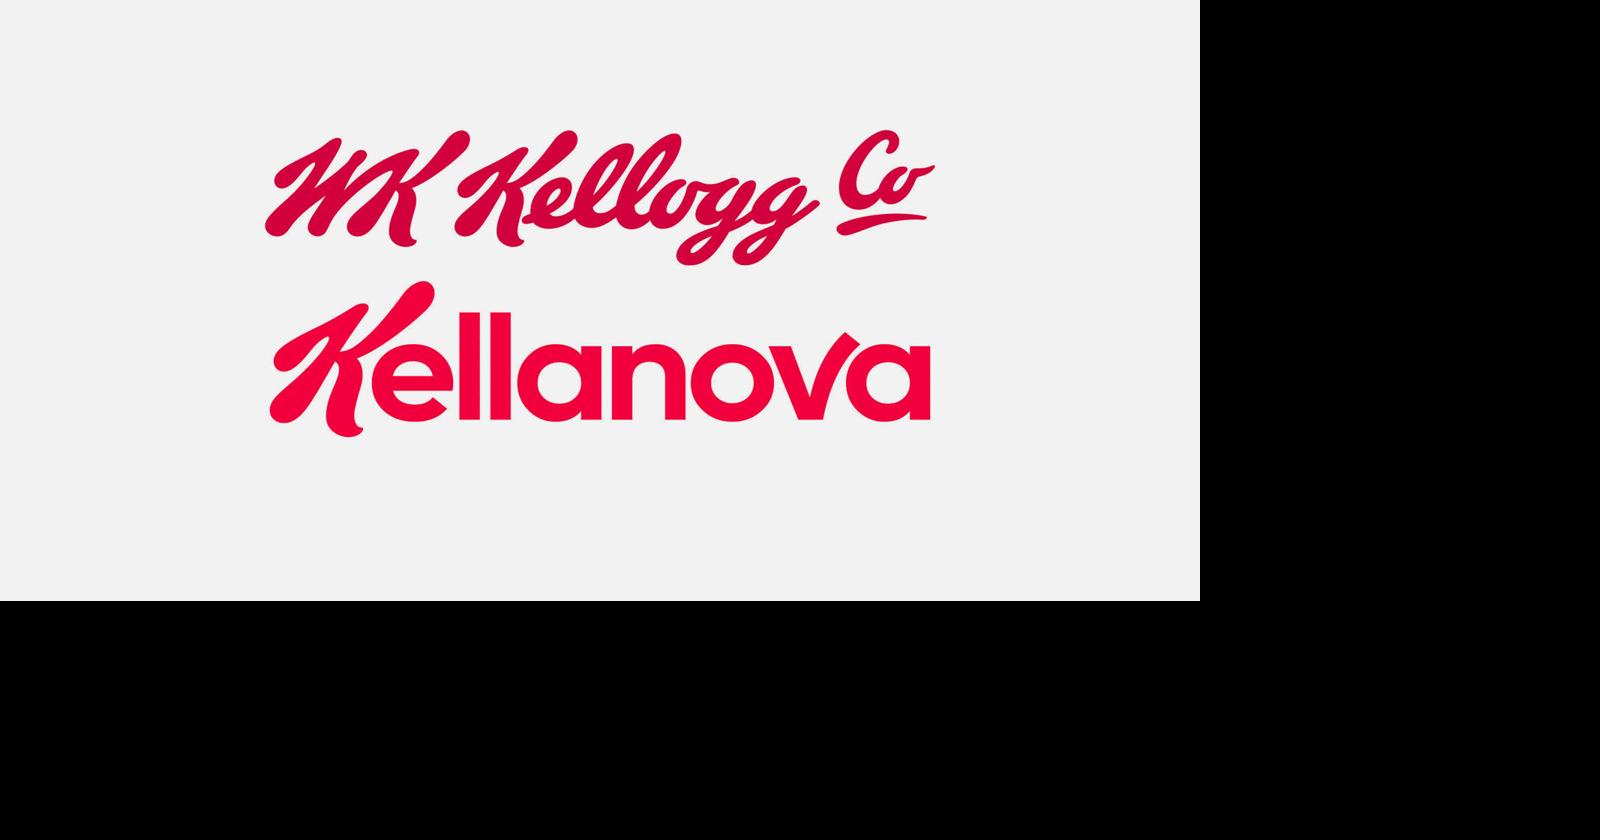 Kellogg is splitting into three different companies